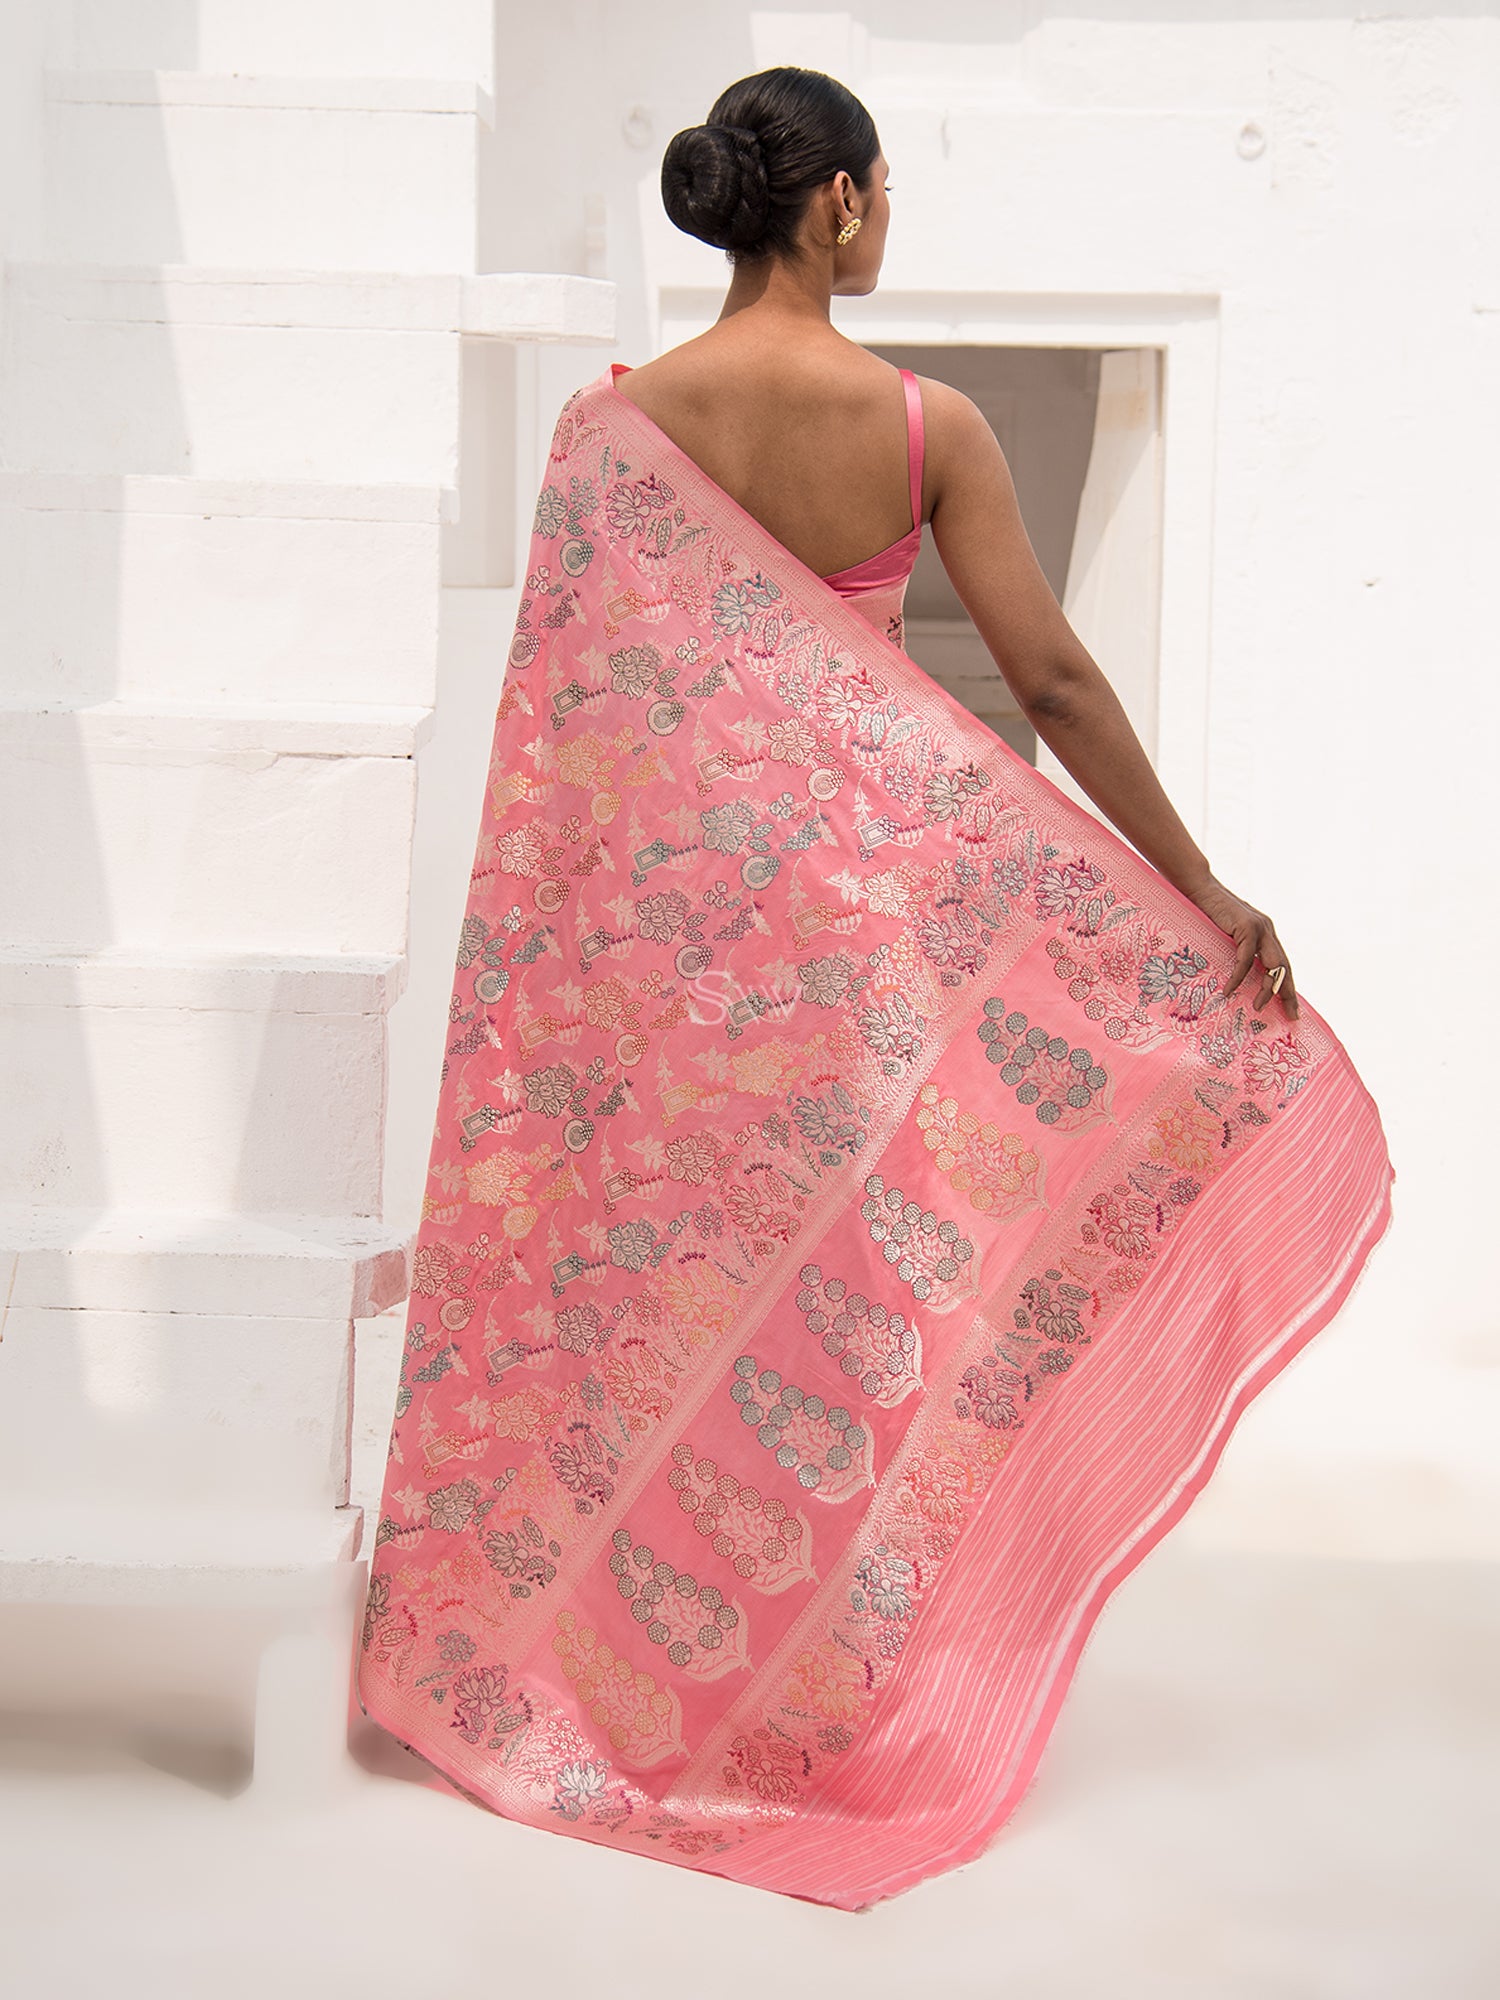 Pastel Pink Meenakari Katan Silk Handloom Banarasi Saree - Sacred Weaves